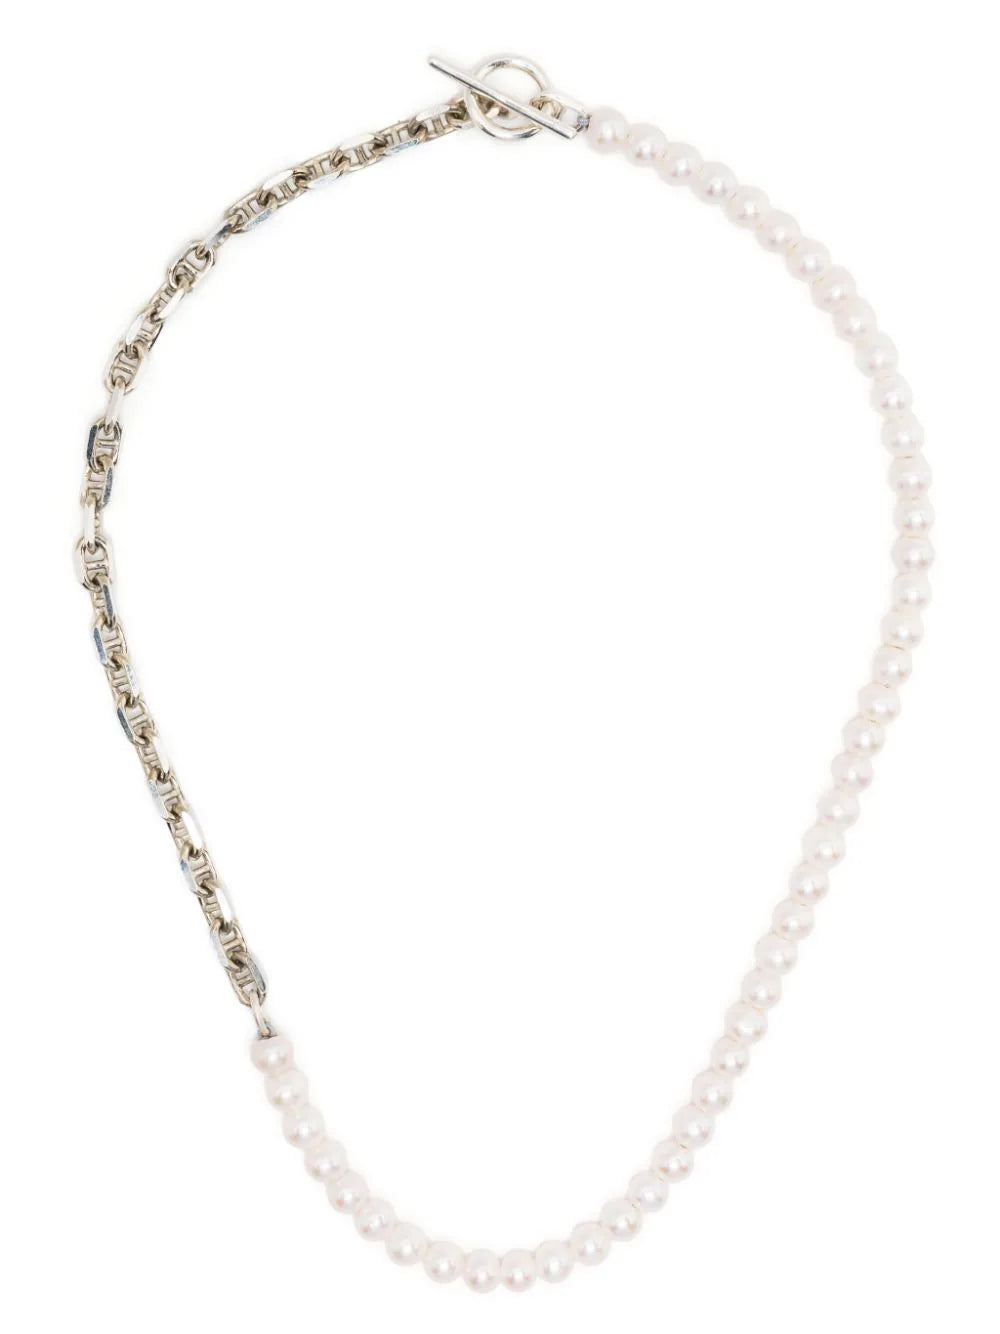 MAOR Perla Marinialinko Necklace in Silver with White Pearls